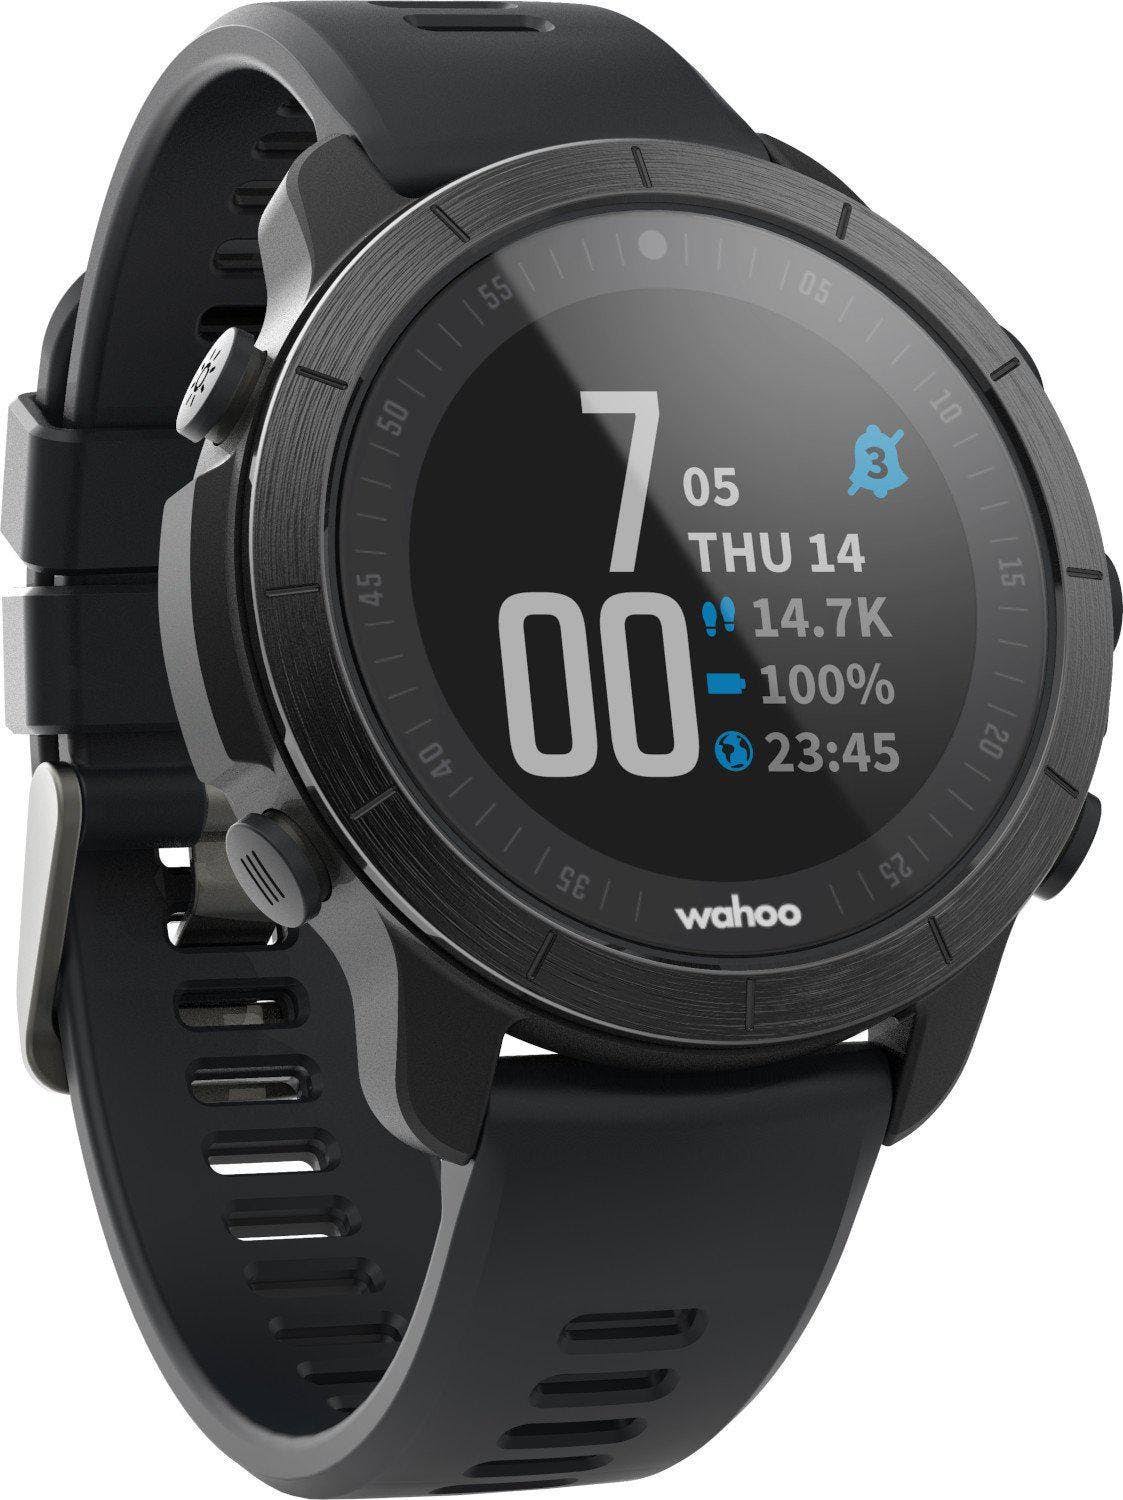 Wahoo Elemnt Rival GPS Watch - Stealth Grey